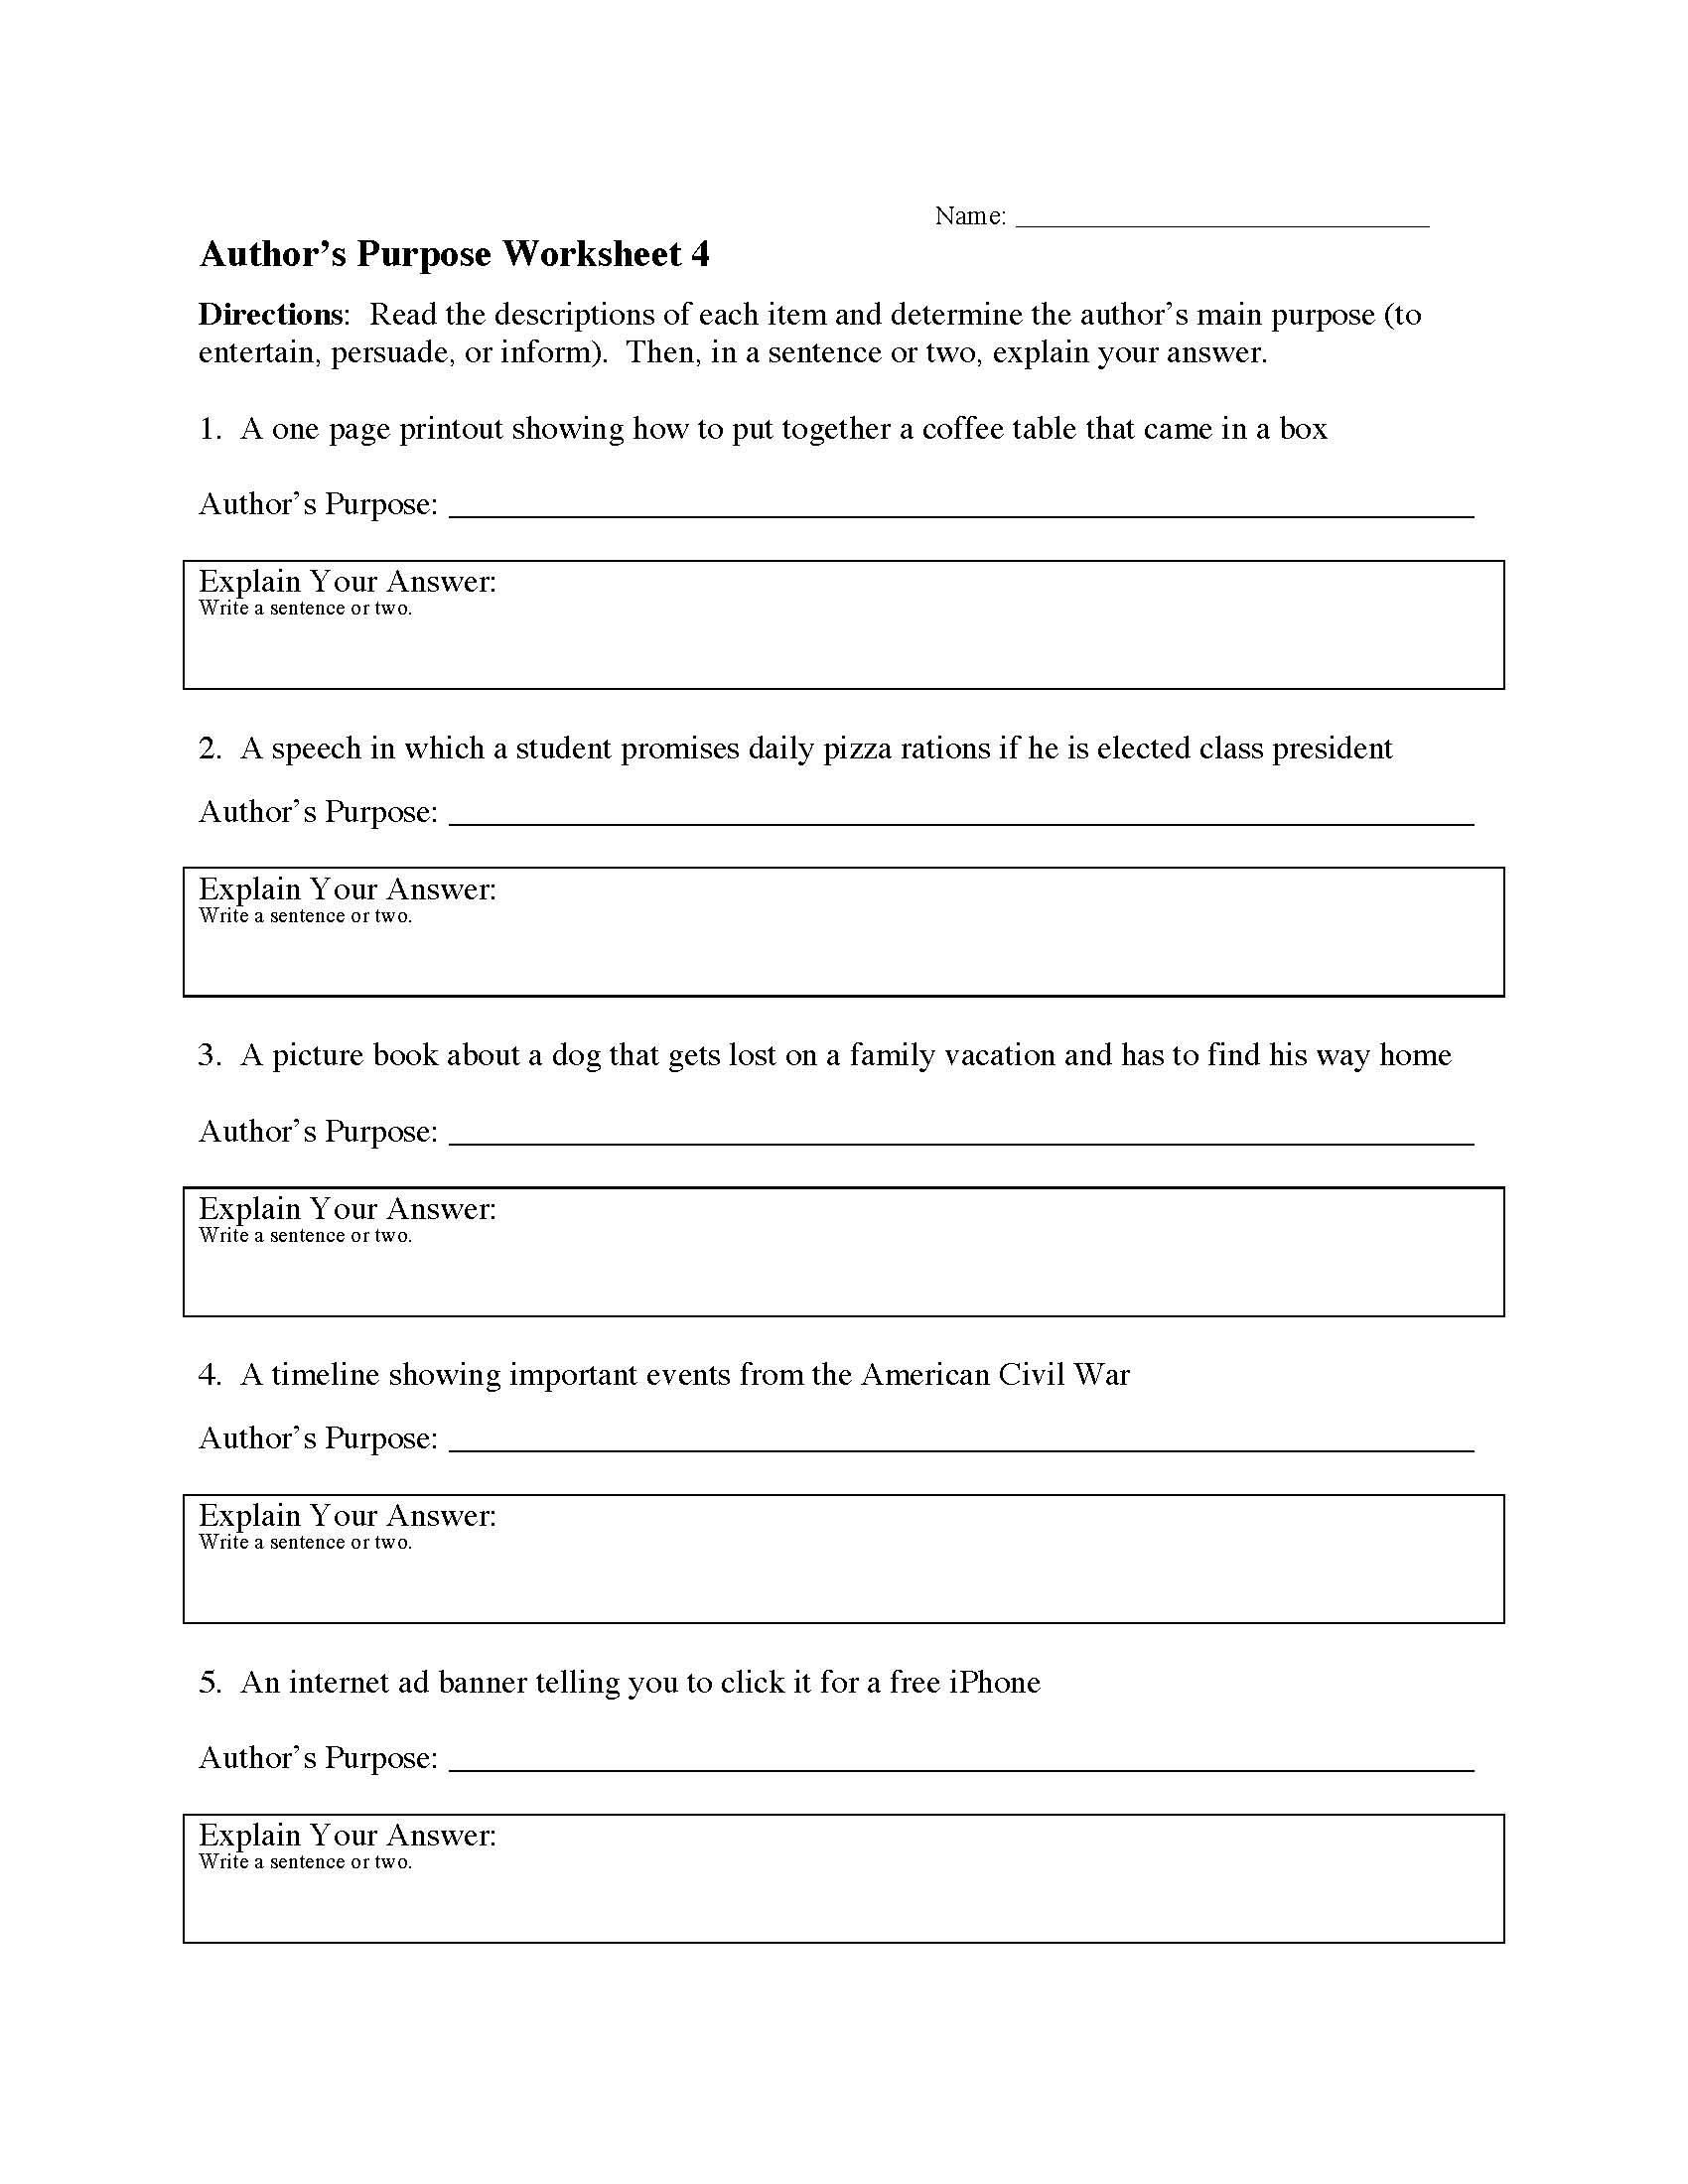 author-s-purpose-worksheets-reading-skills